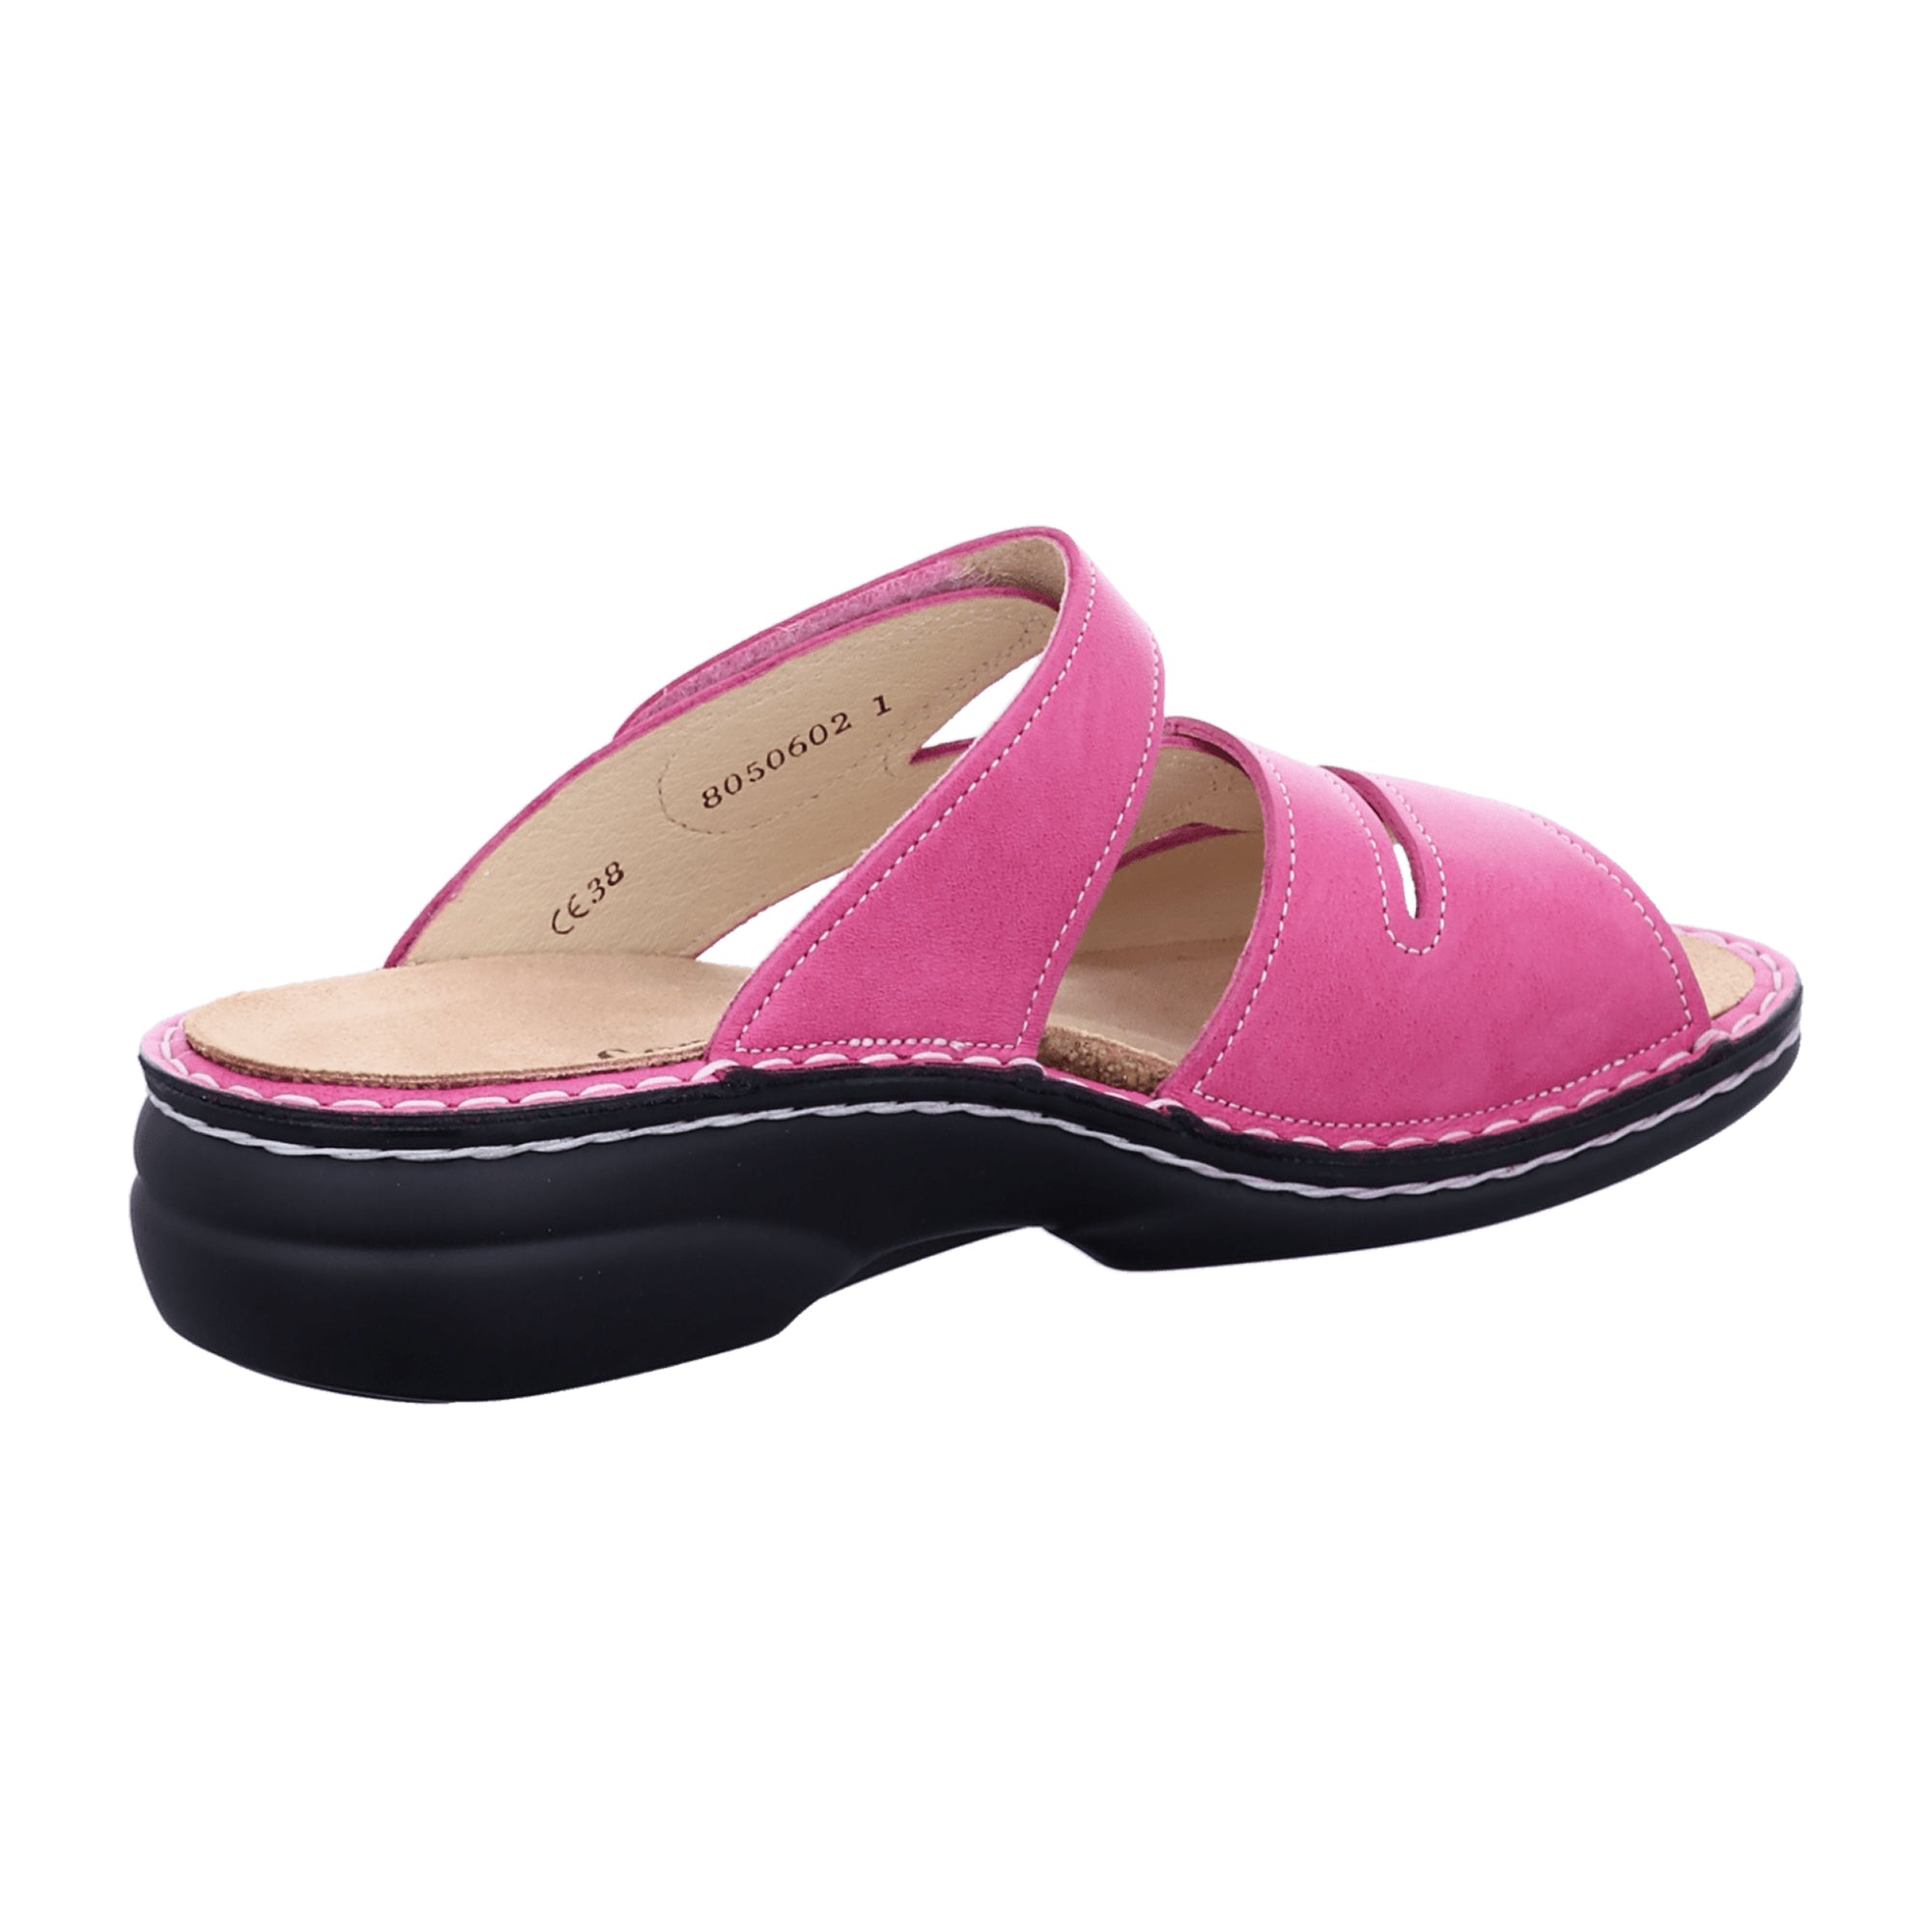 Finn Comfort Ventura-S Women's Comfort Sandals, Vibrant Pink